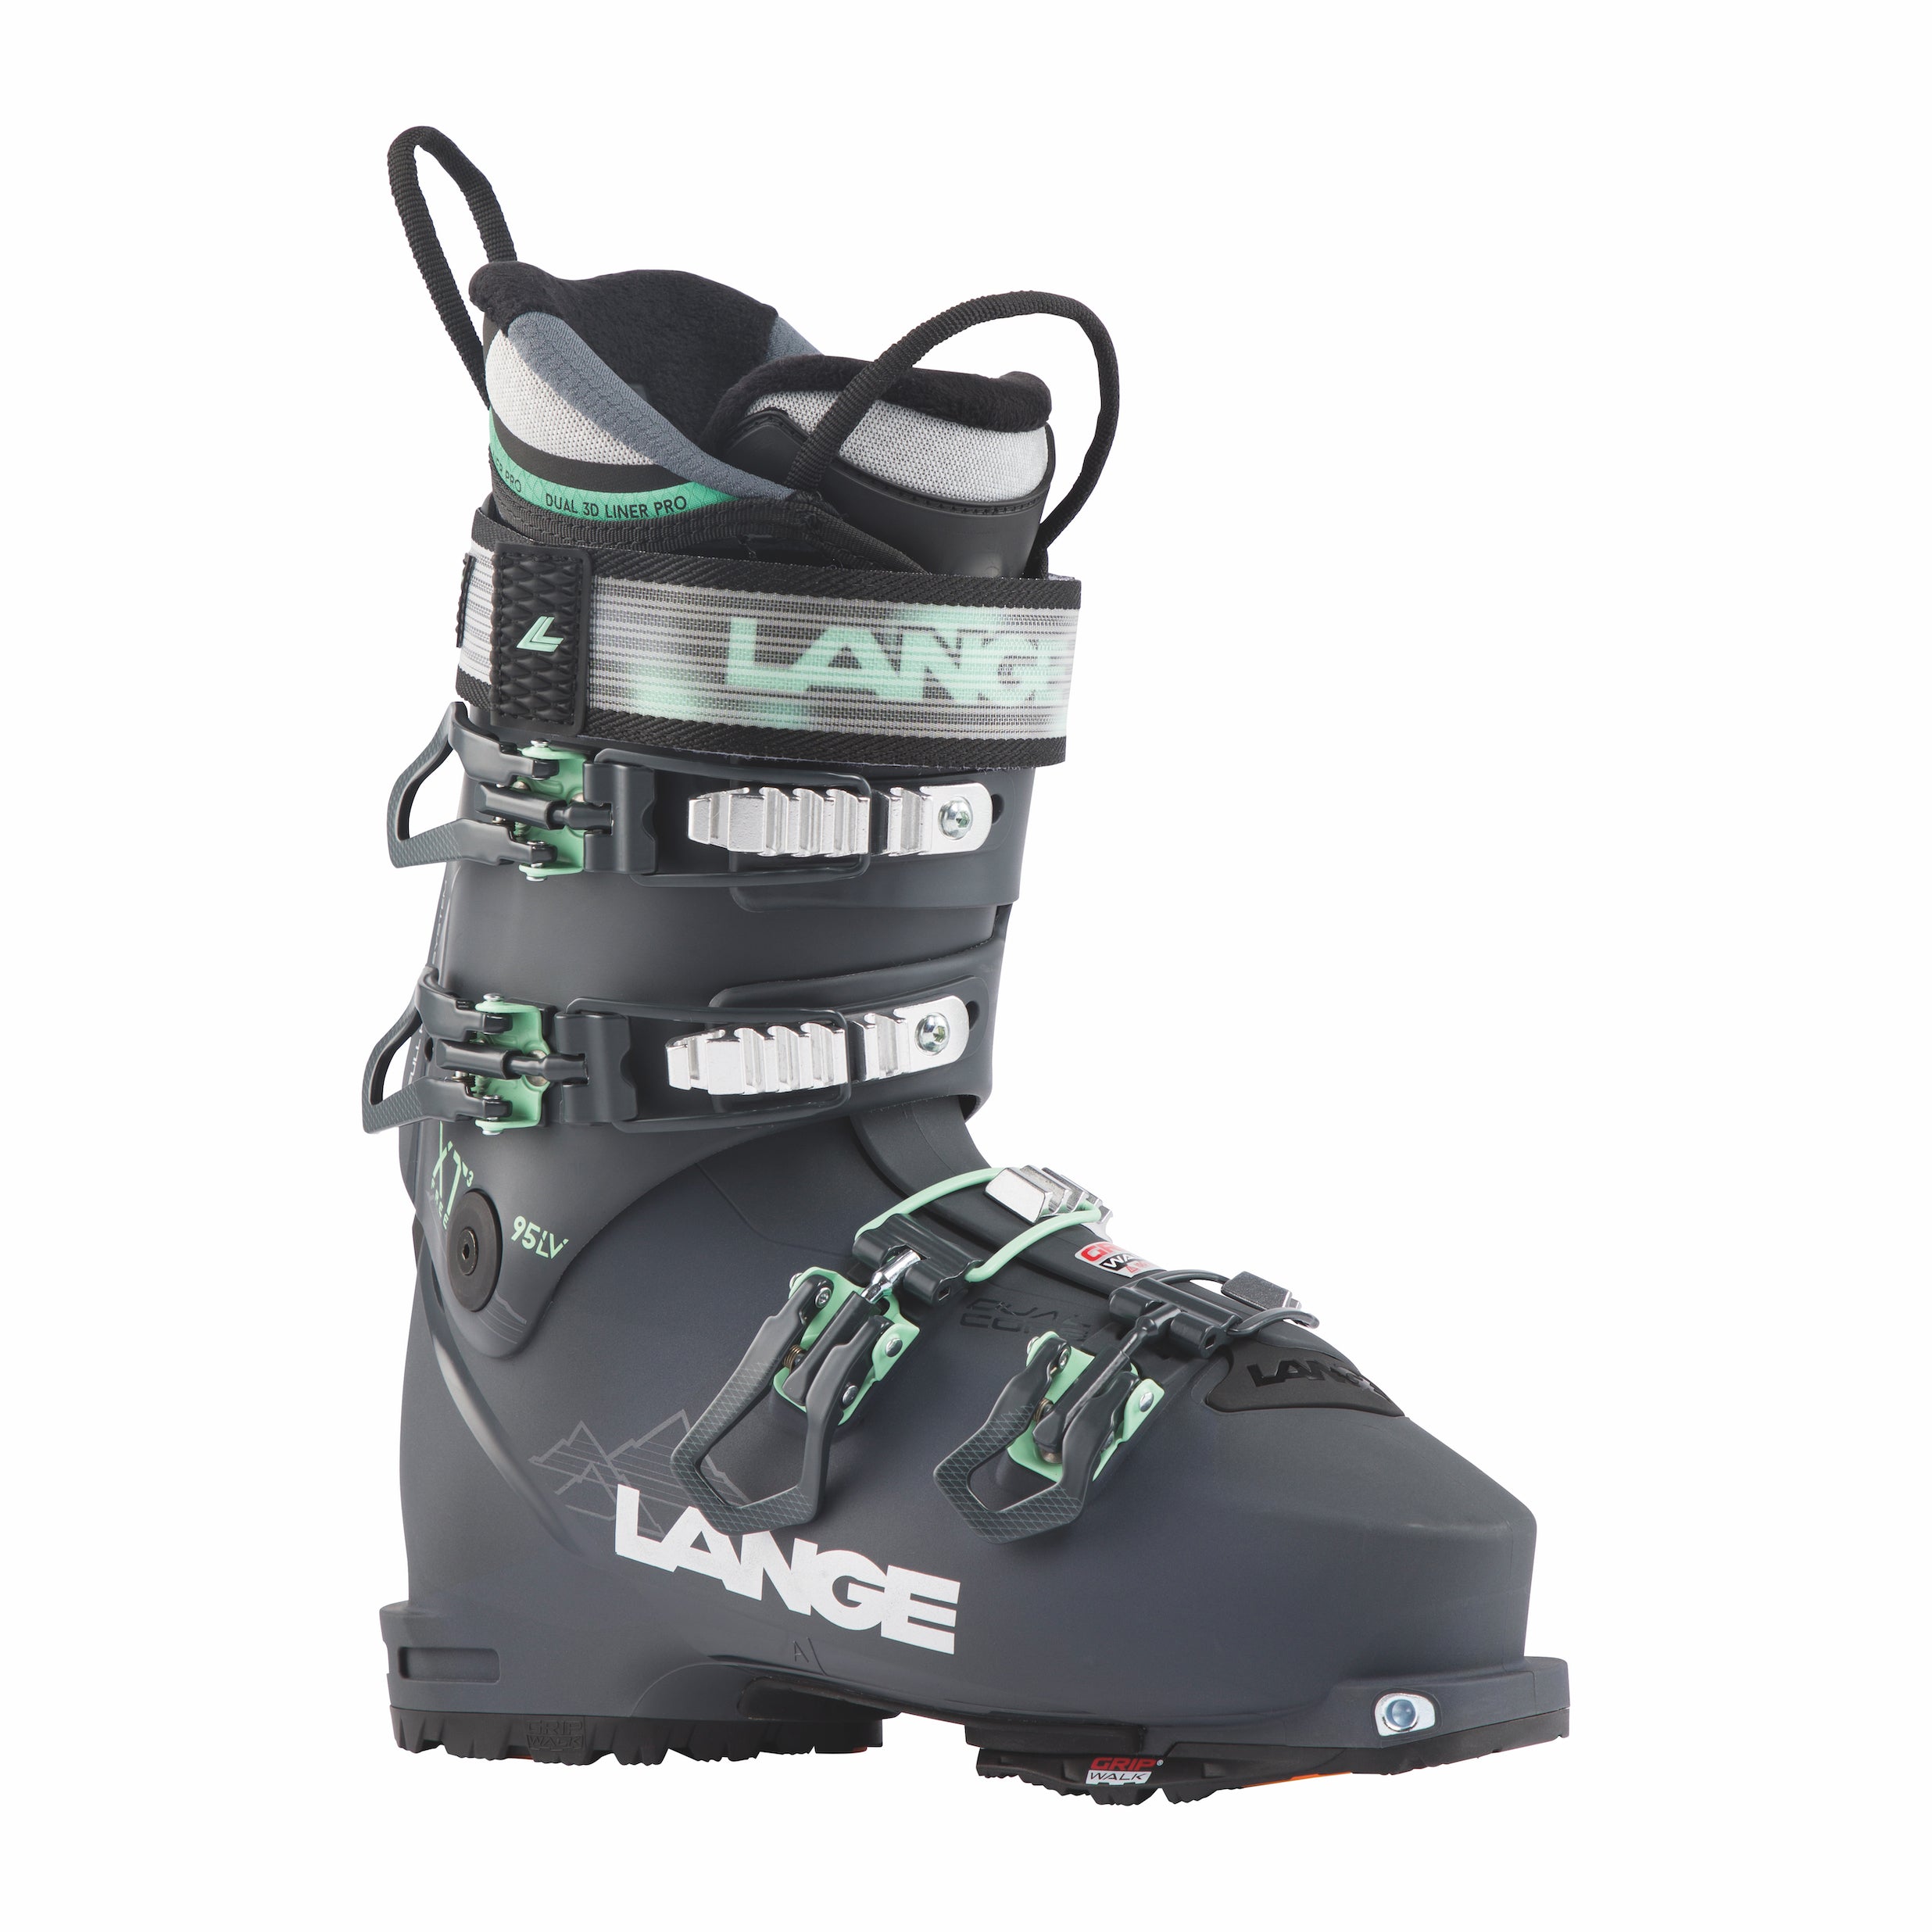 Women's Lange XT3 Free 95 LV ski boot, dark bluish grey with light blue accents and minimal mountain graphic designs.